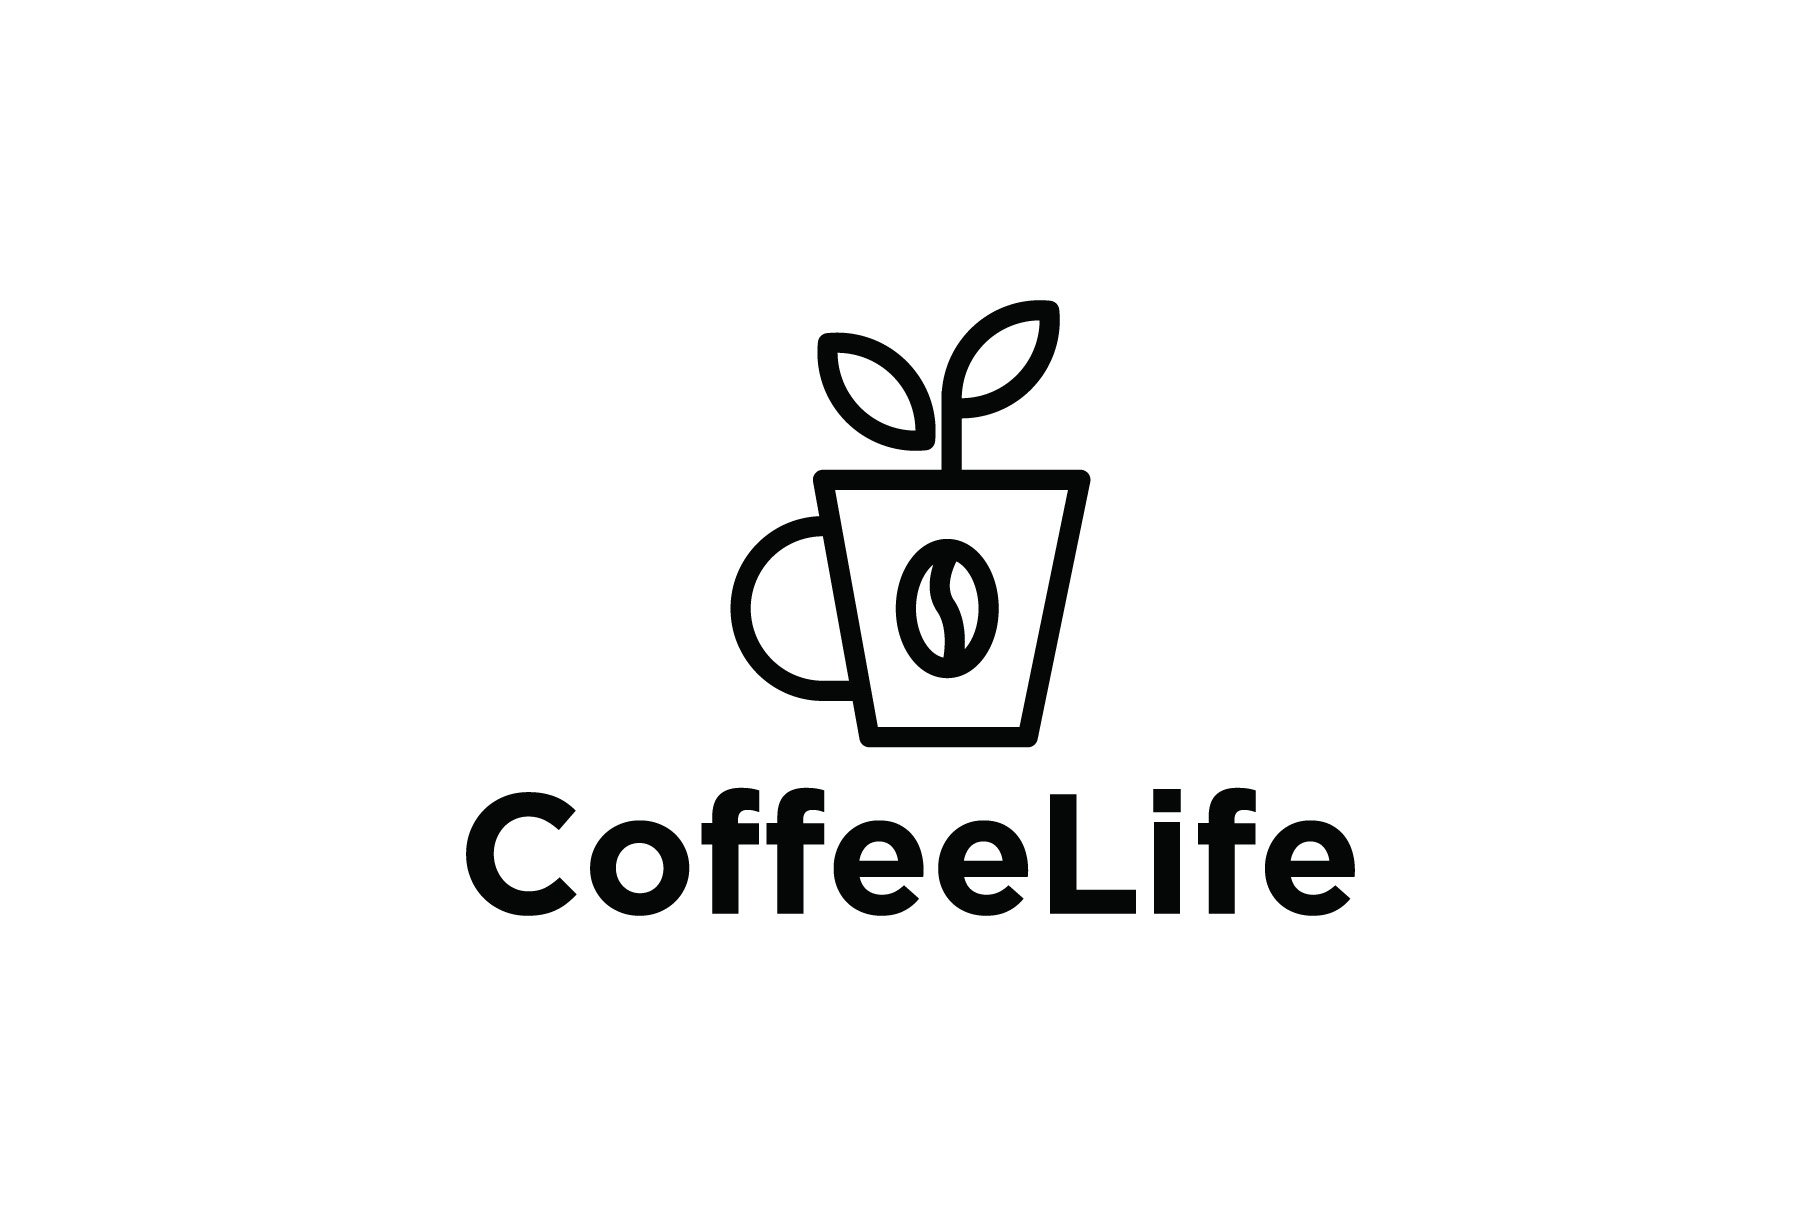 Outline coffee logo.